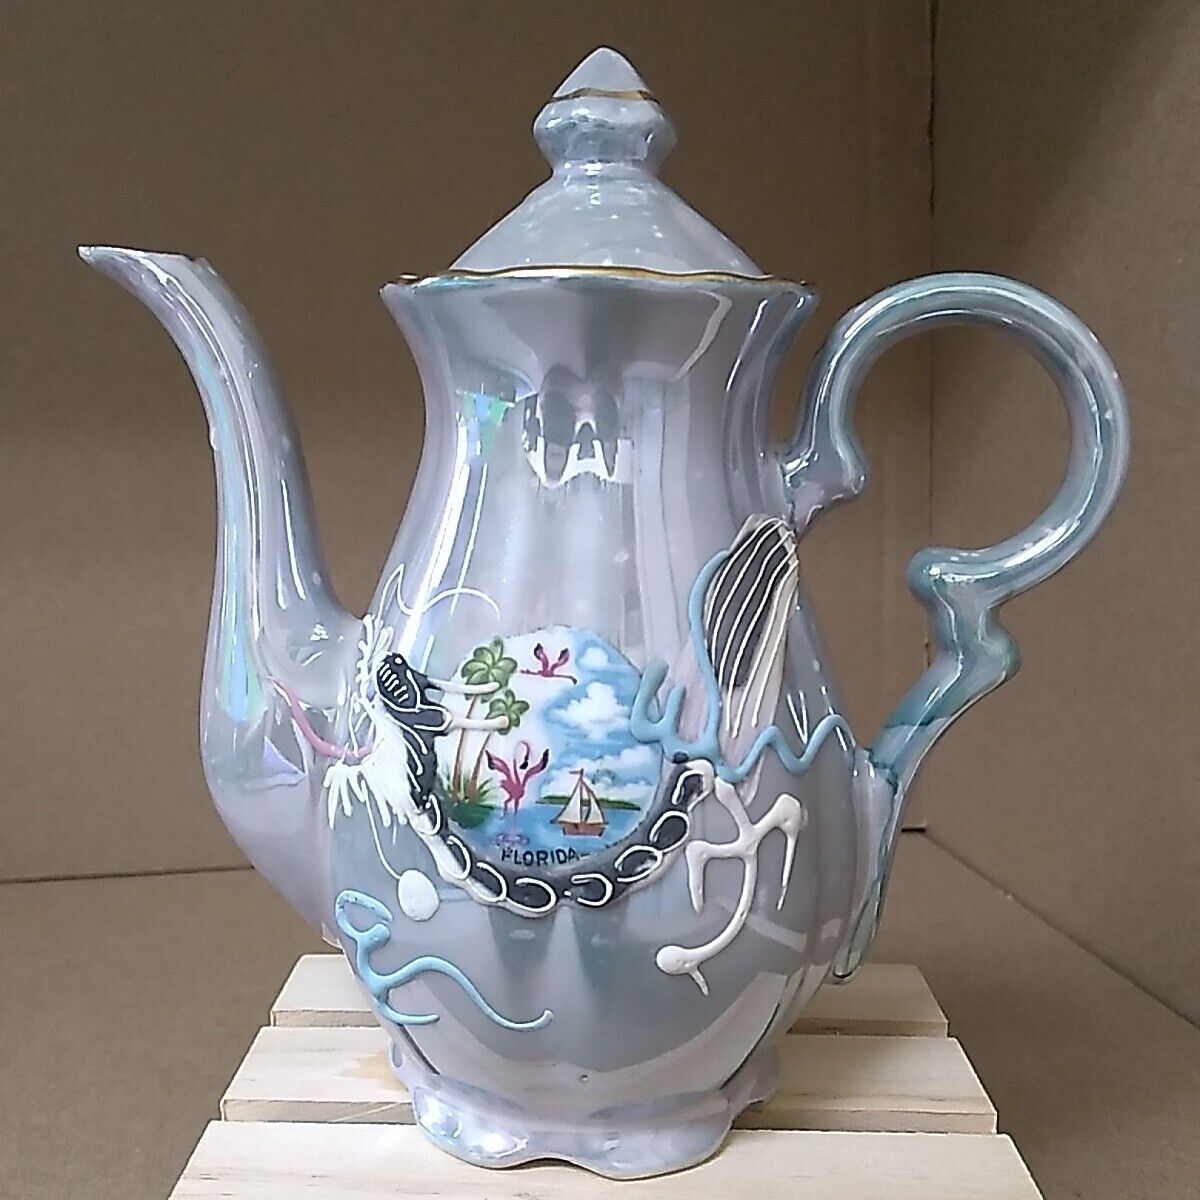 Florida Vintage Souvenir Teapot With Dragon And Florida Flamingo Sailboat Scene